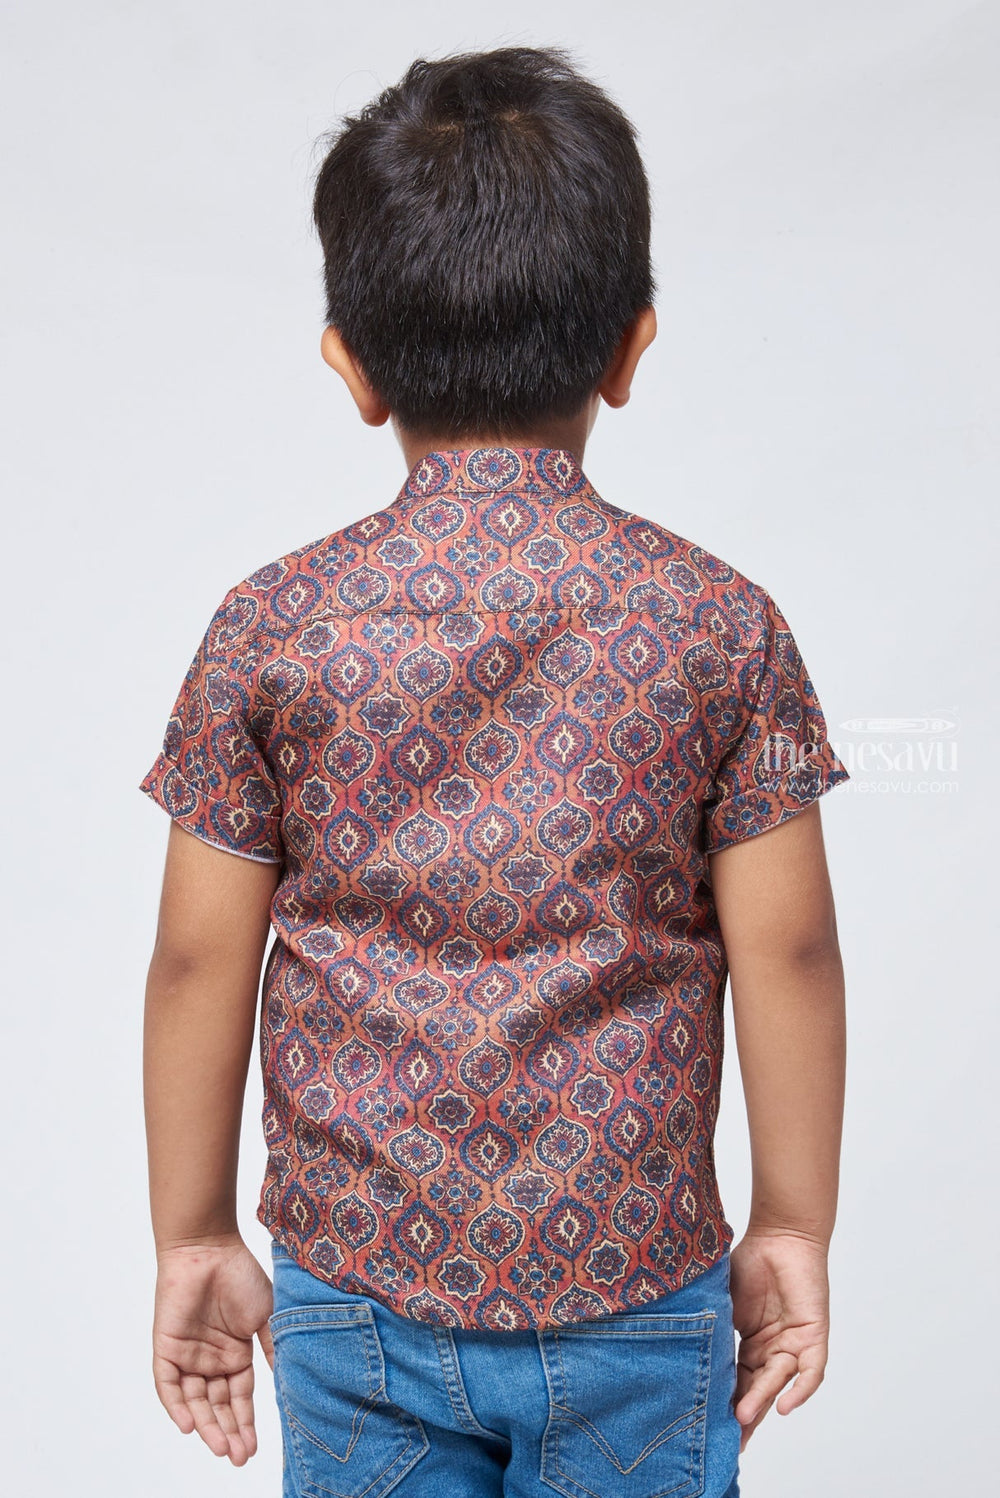 The Nesavu Boys Linen Shirt Rustic Appeal: Ajrakh Hand Block Print Boys' Shirt for a Vintage-Inspired Look Nesavu Ajrakh Hand Block Printed Boys Shirt | Baby Boys Shirt | The Nesavu